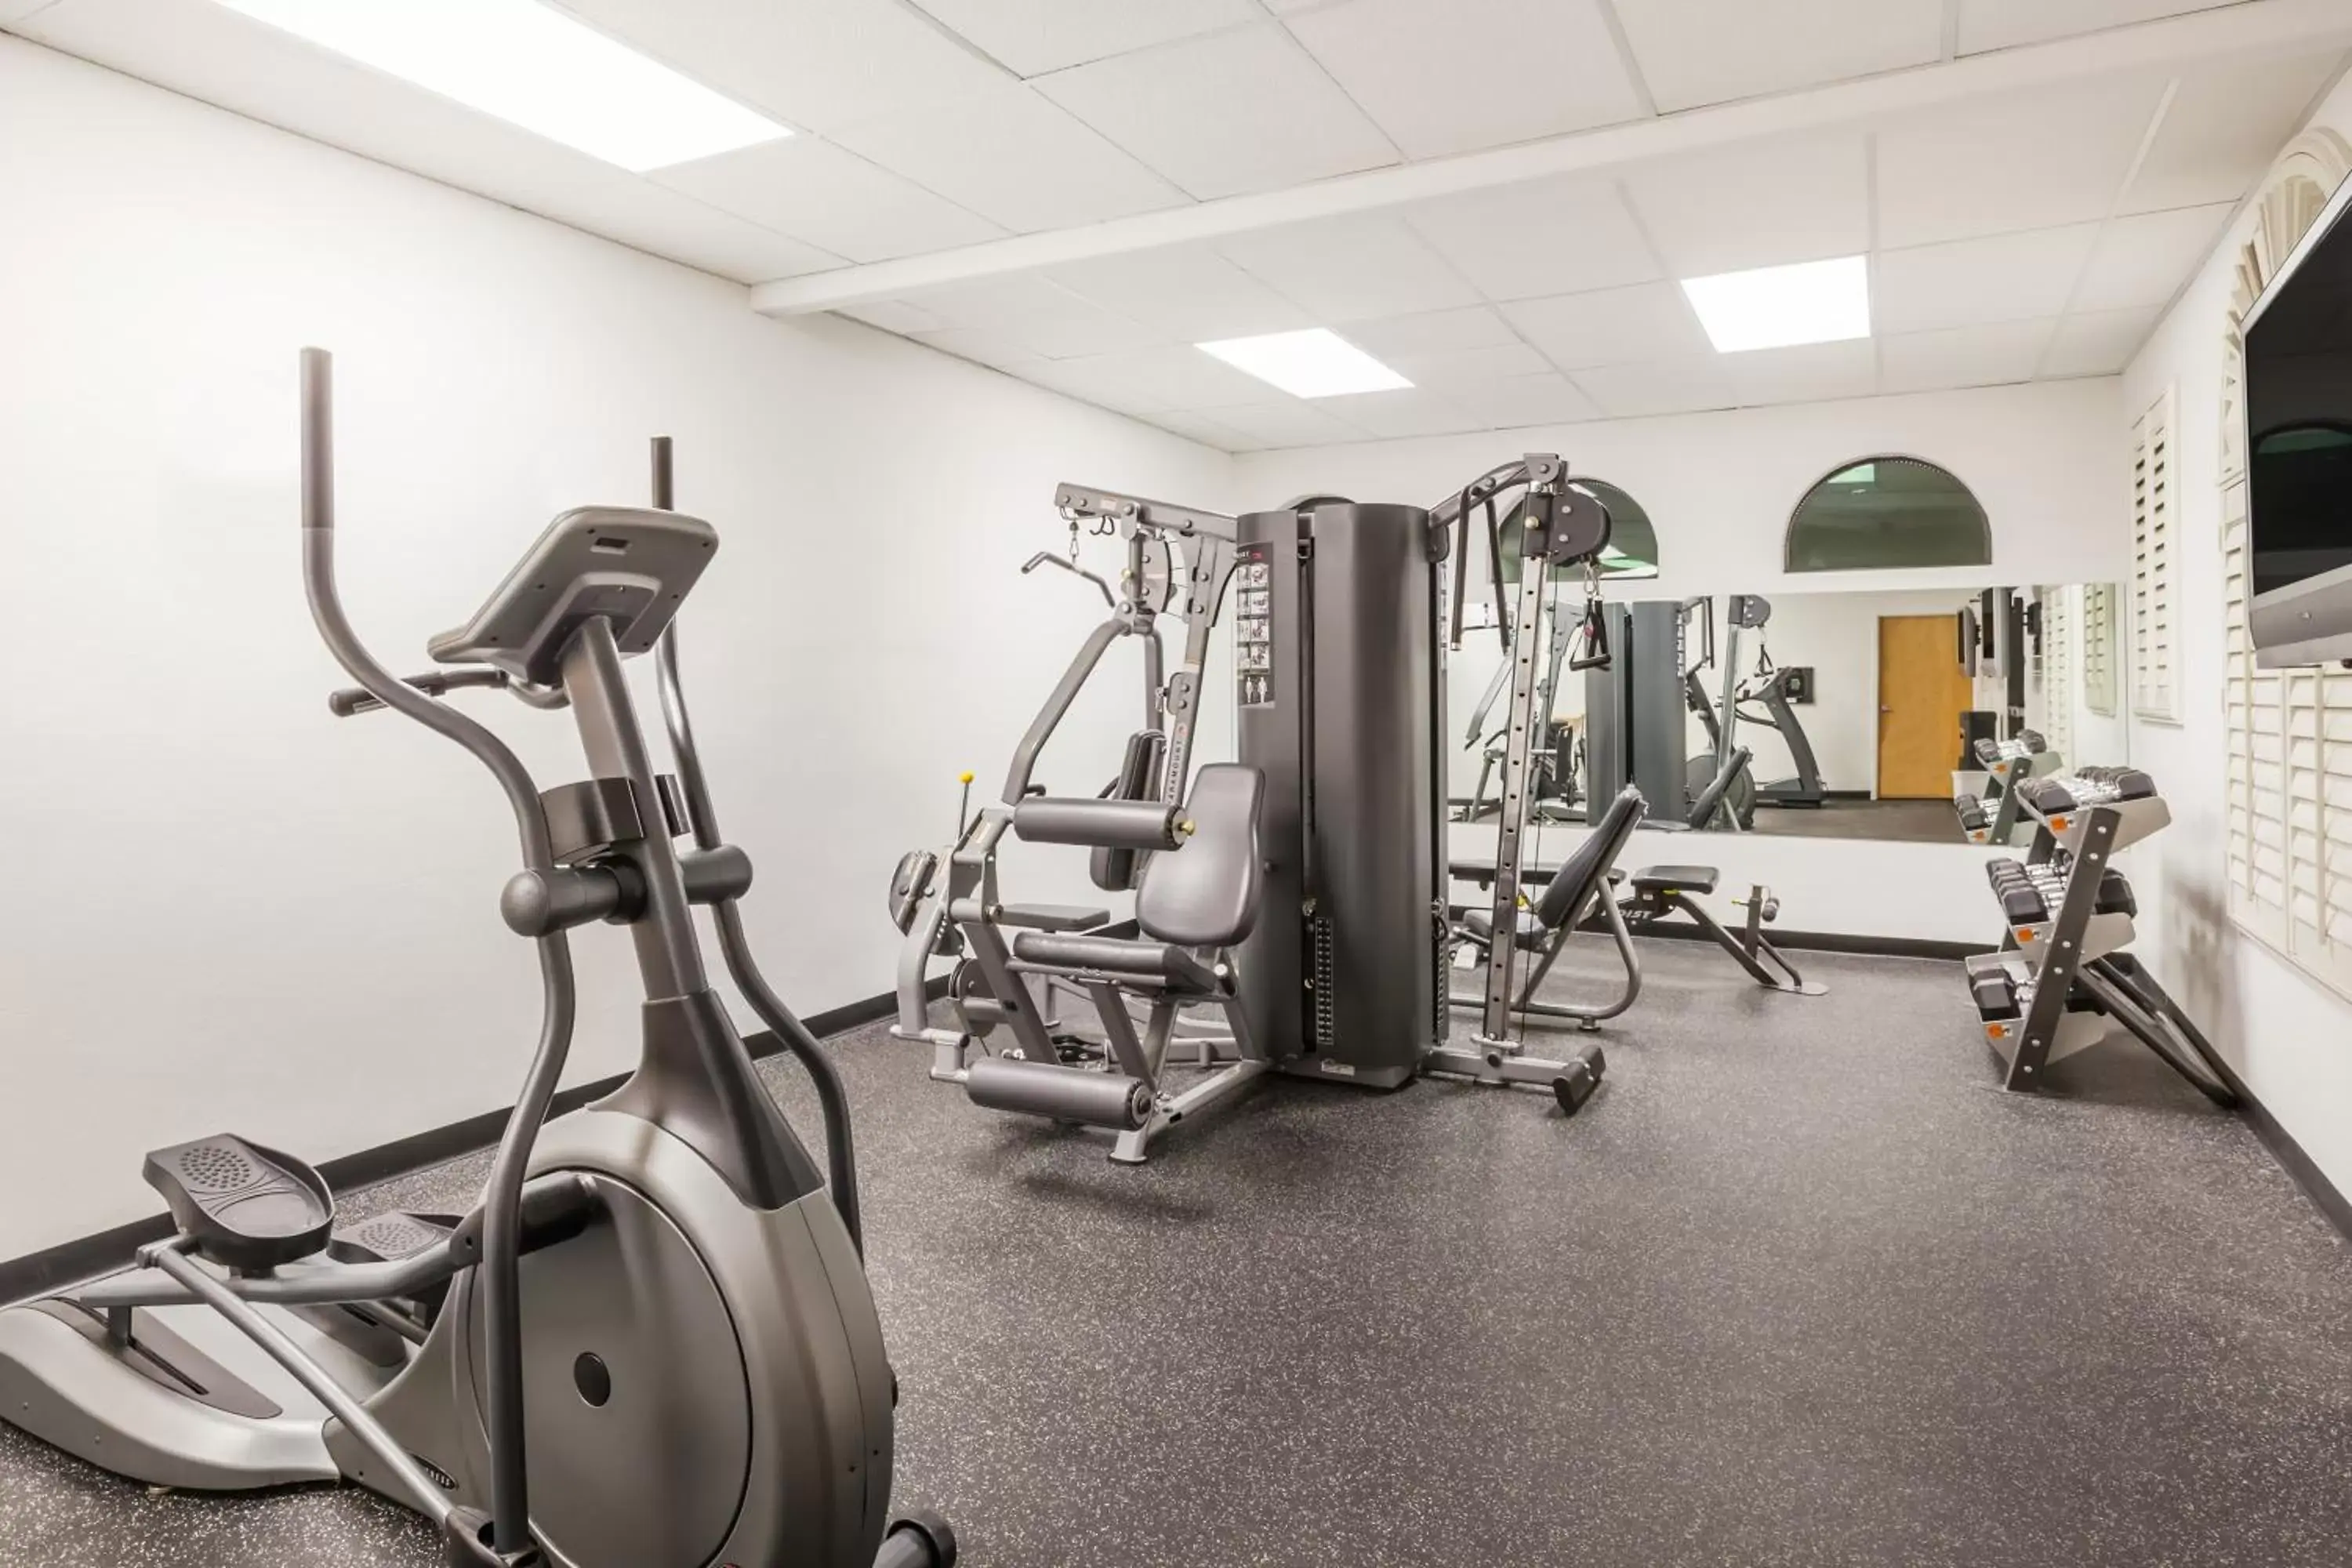 Fitness centre/facilities, Fitness Center/Facilities in Canoa Ranch Golf Resort